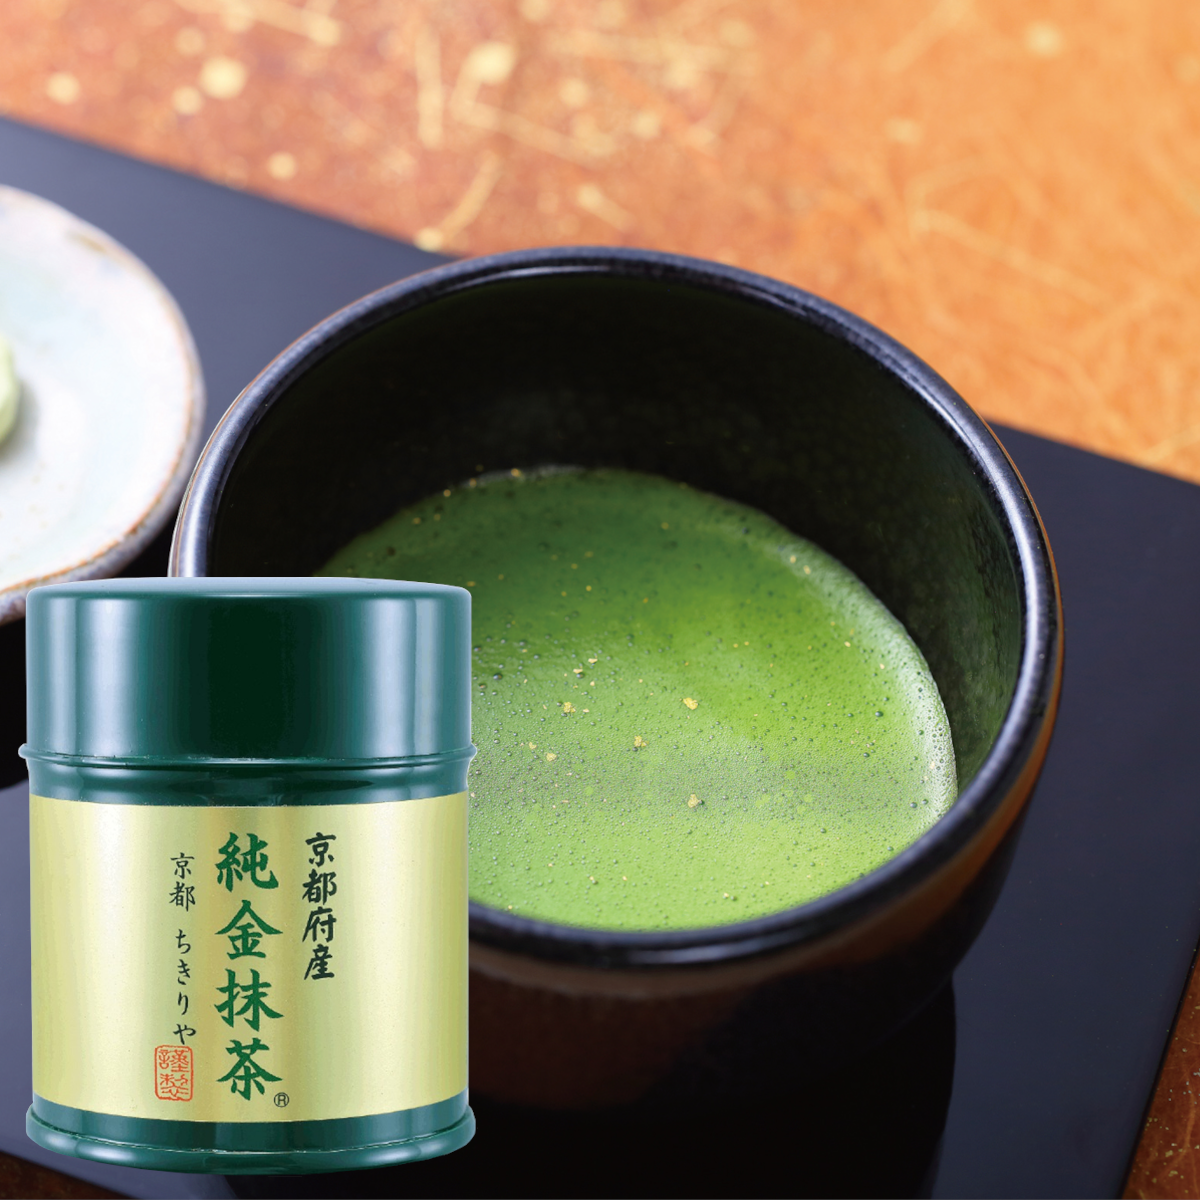 Kyoto Matcha with Gold edible glitter flakes - 20g green tea powder